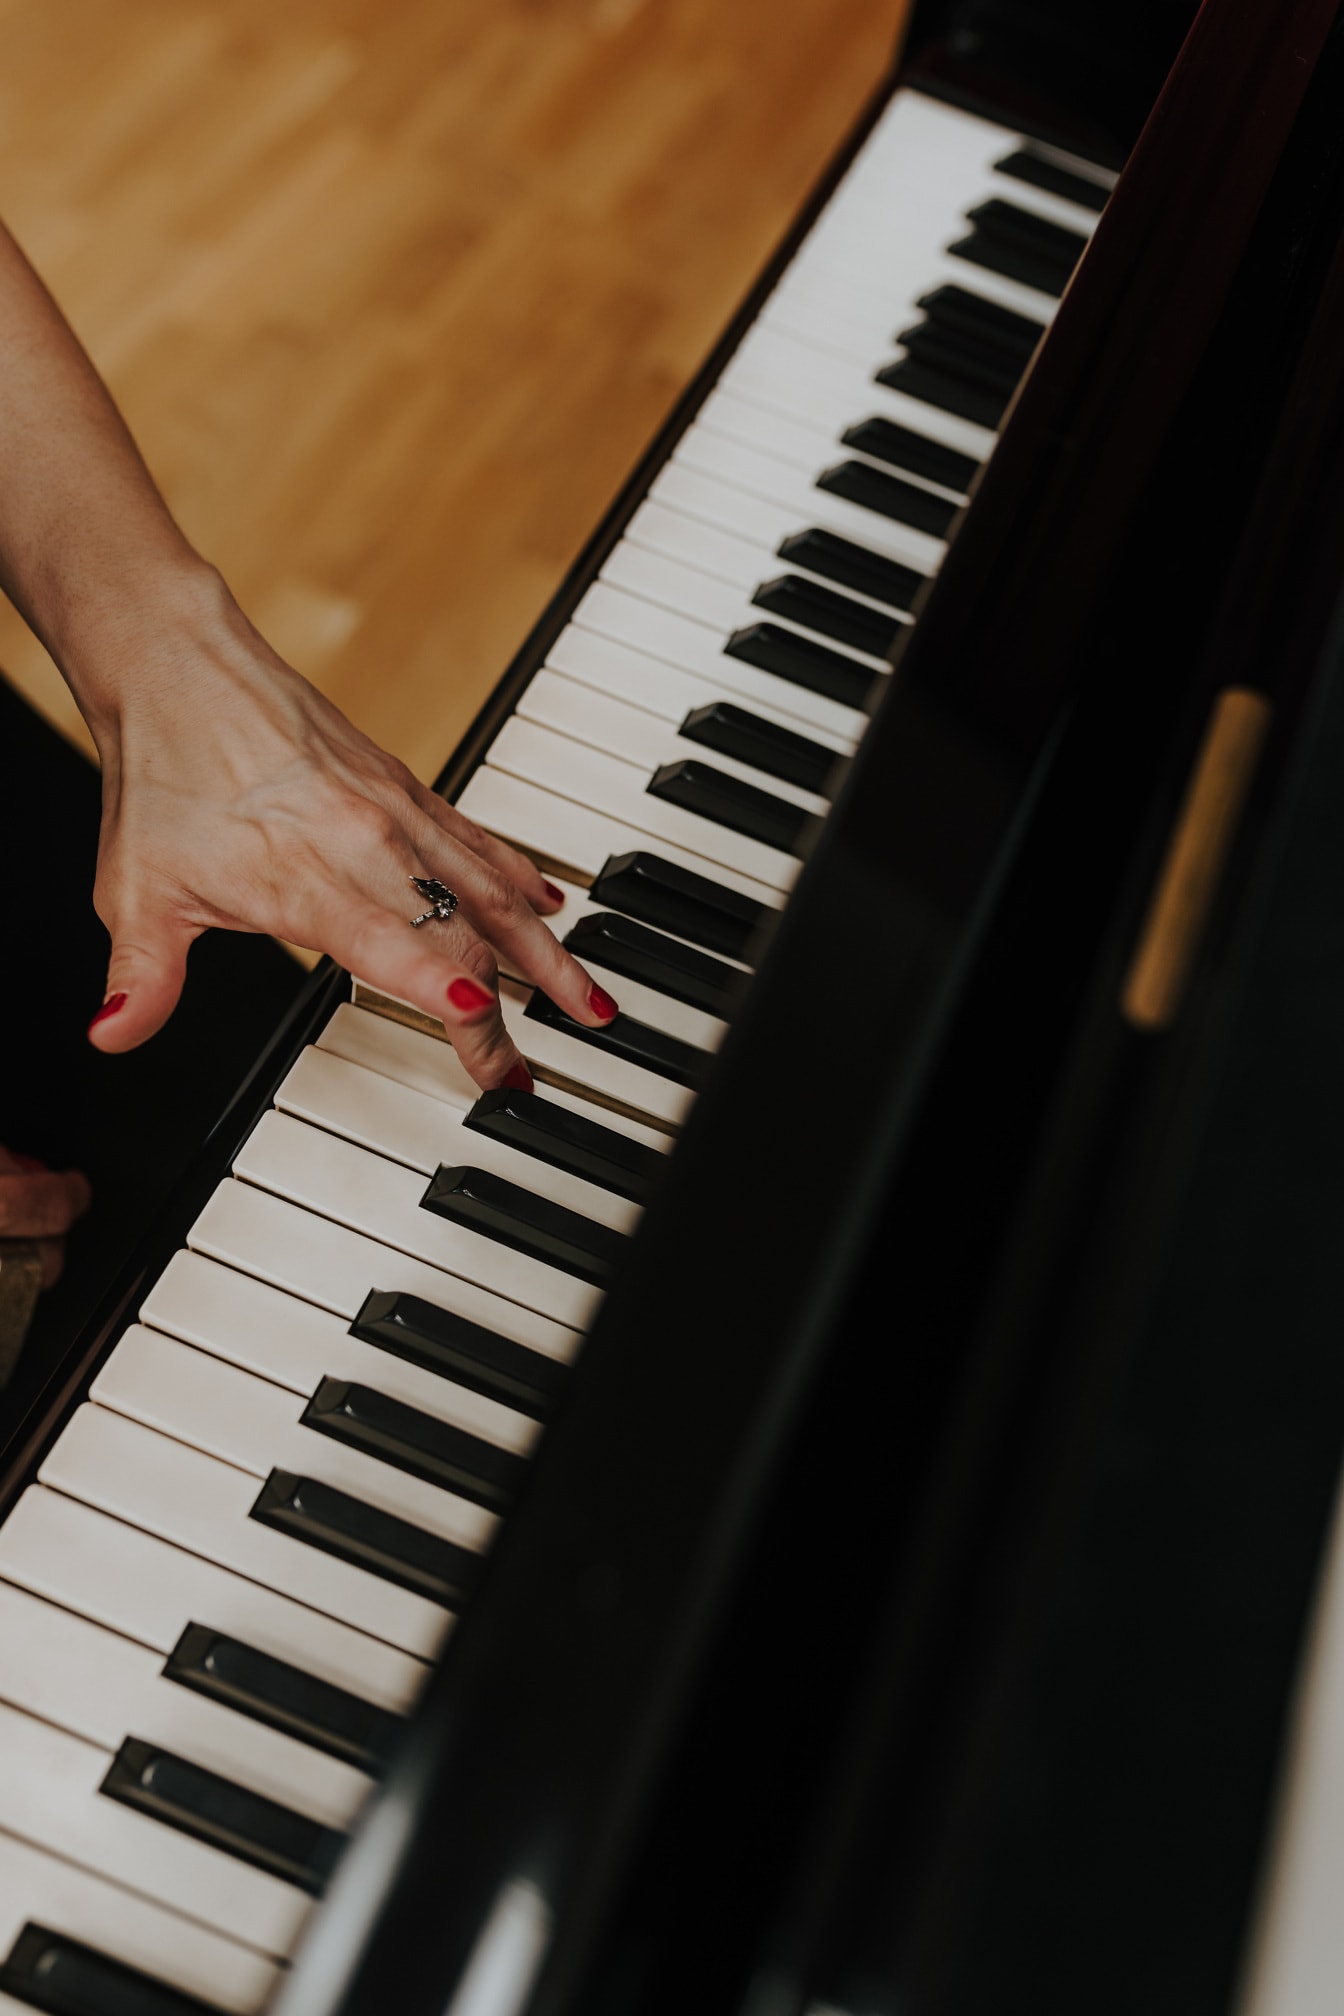 Wanita bermain piano close-up cat kuku merah di jari